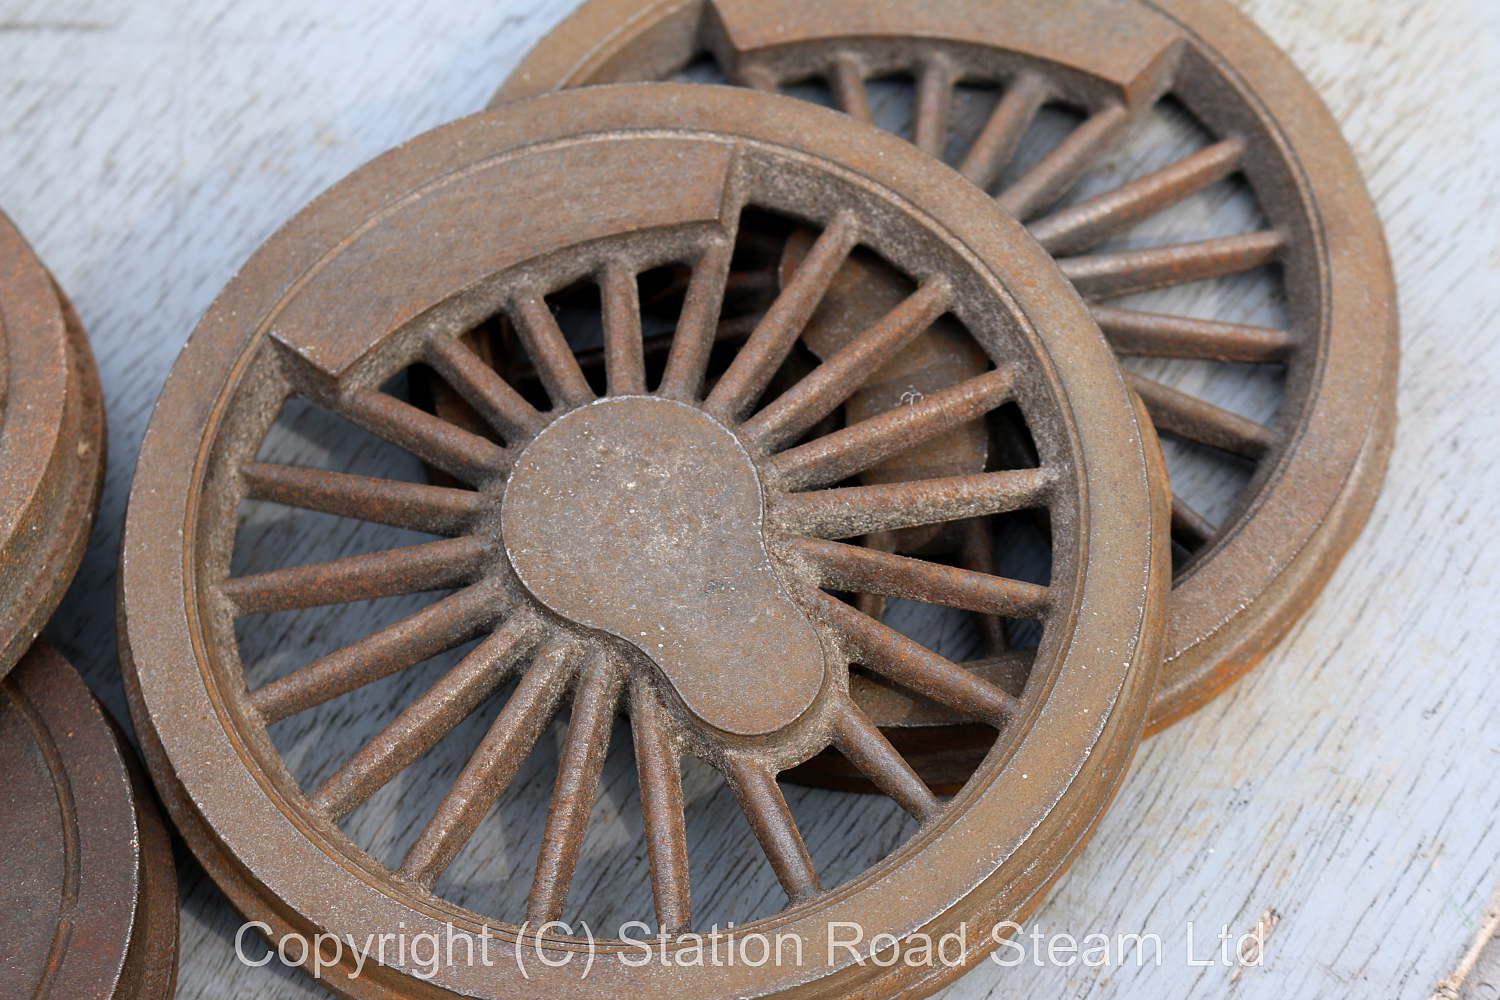 3 1/2 inch gauge Britannia frames & wheel castings